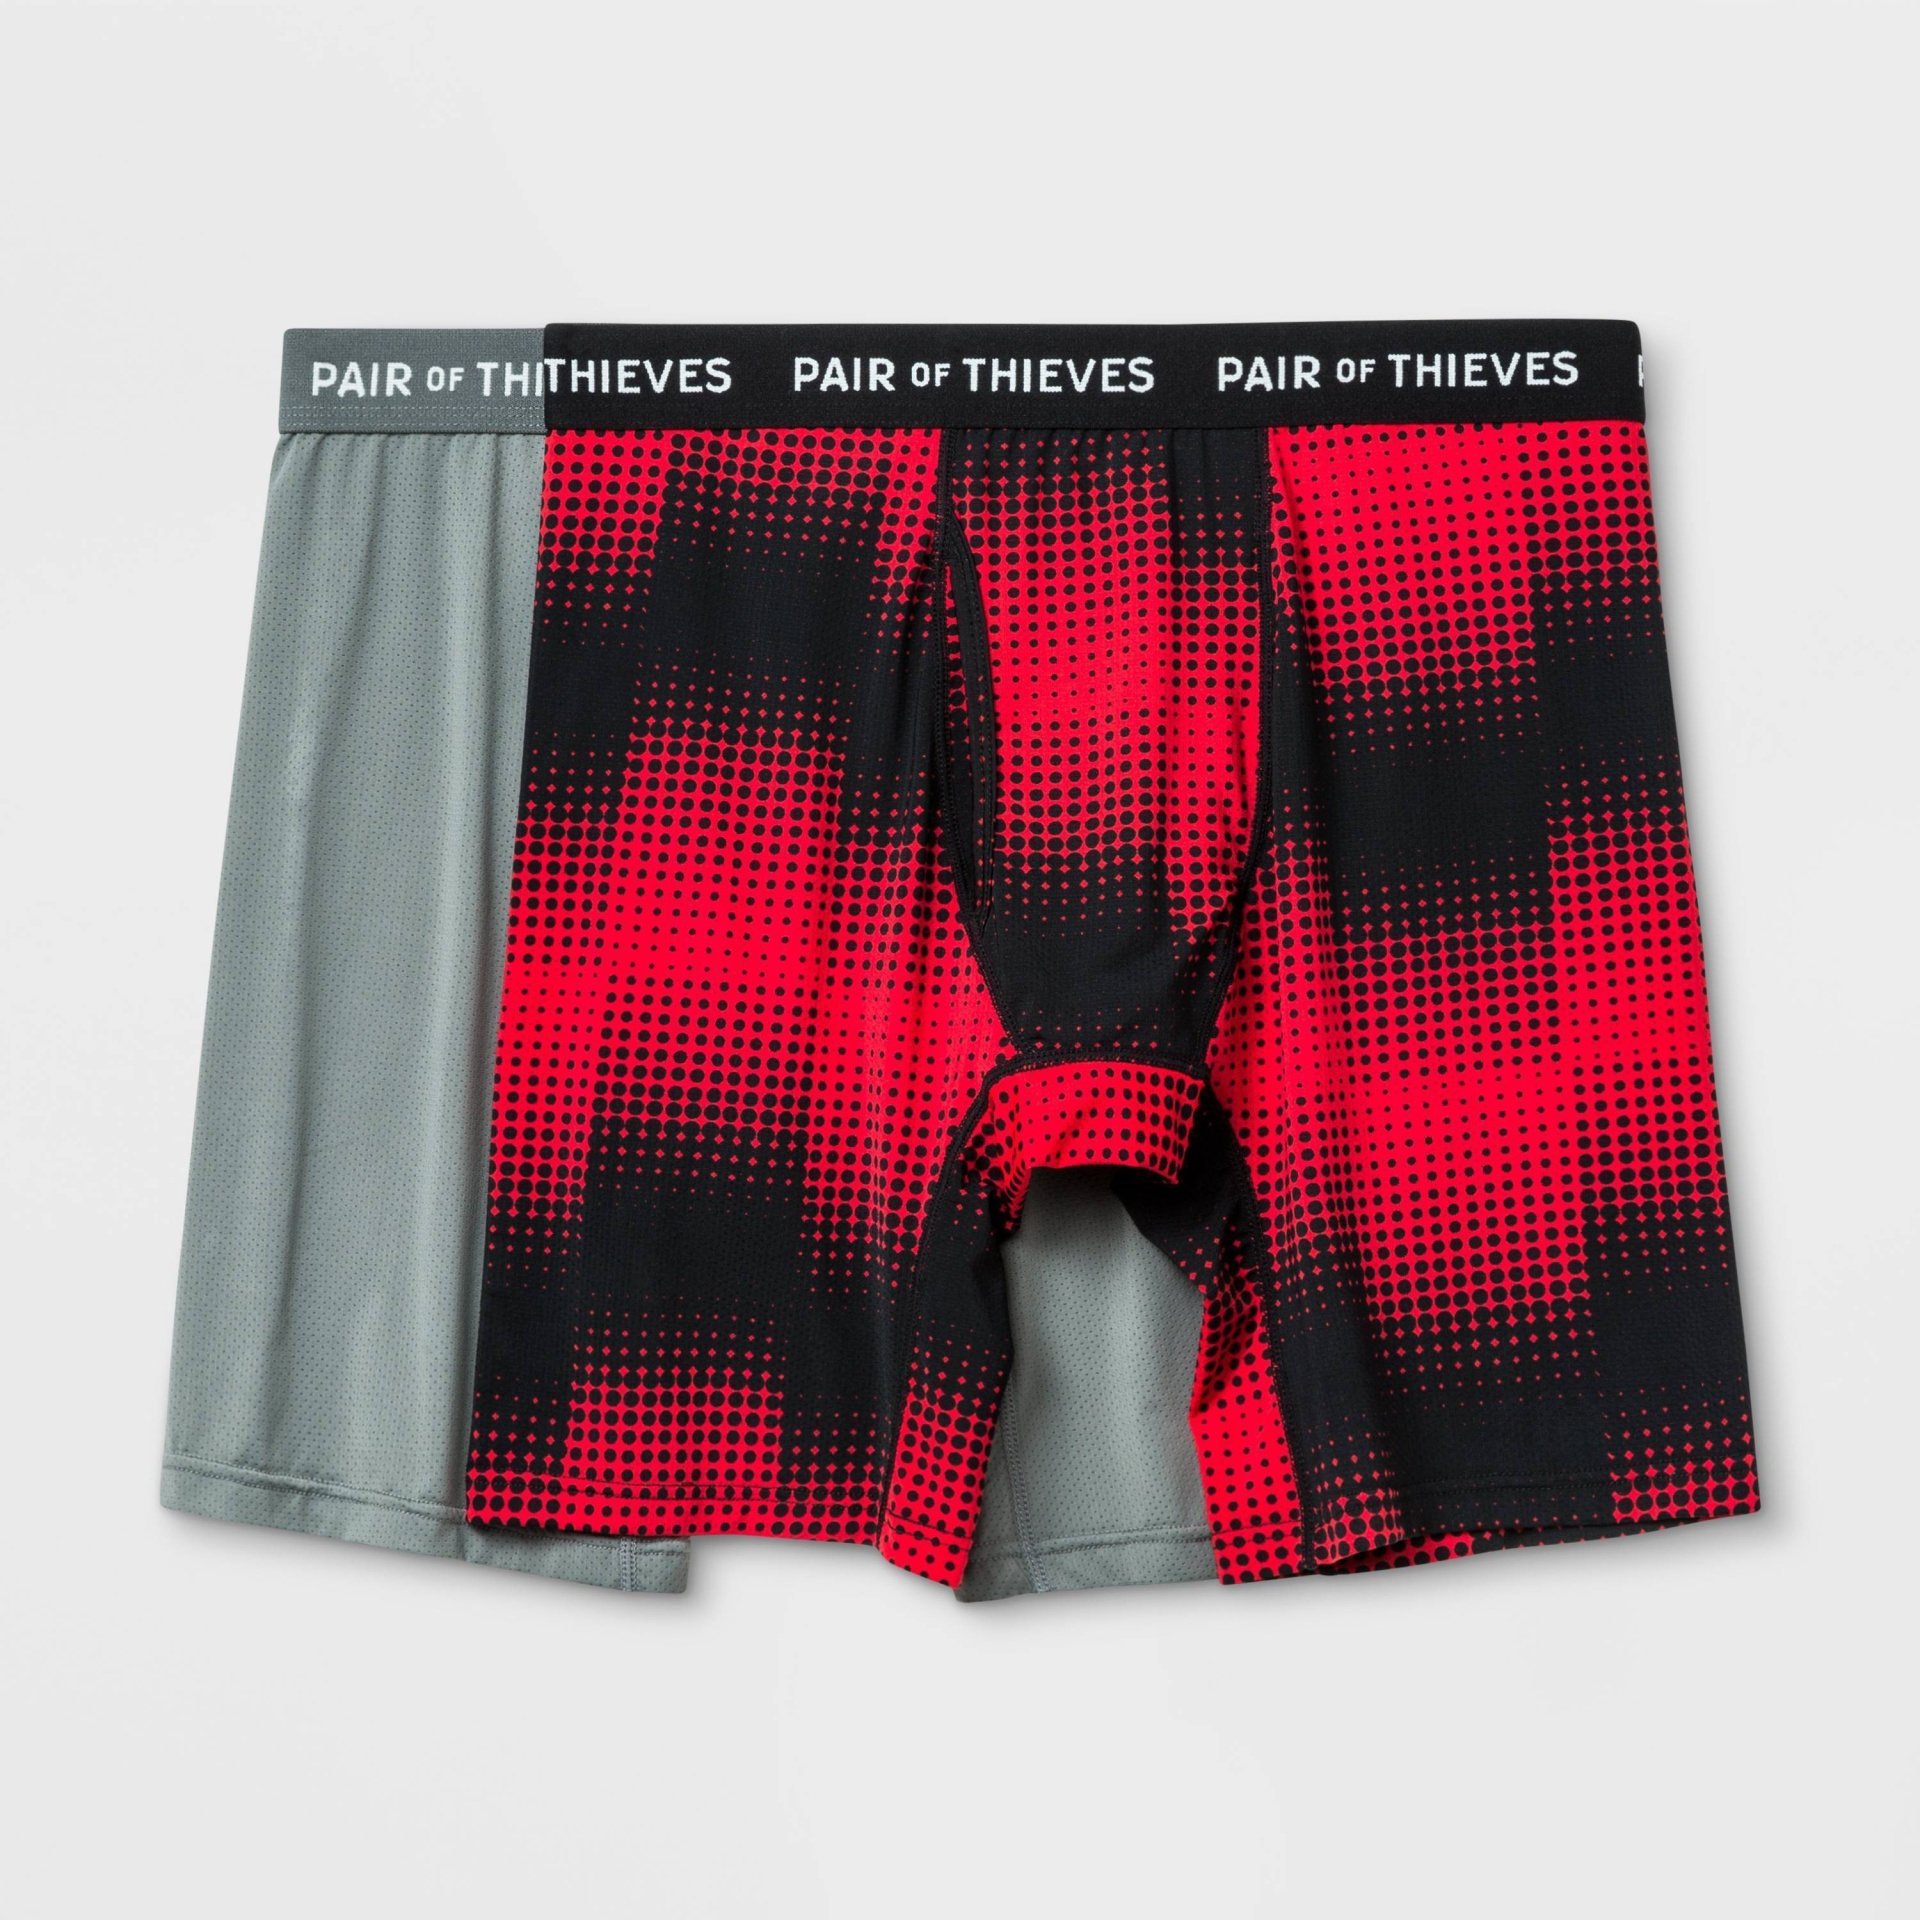 Pair of Thieves Men's Super Fit Long Boxer Briefs 2pk -  Red/Black/Gray/Ombre Design XL 1 ct